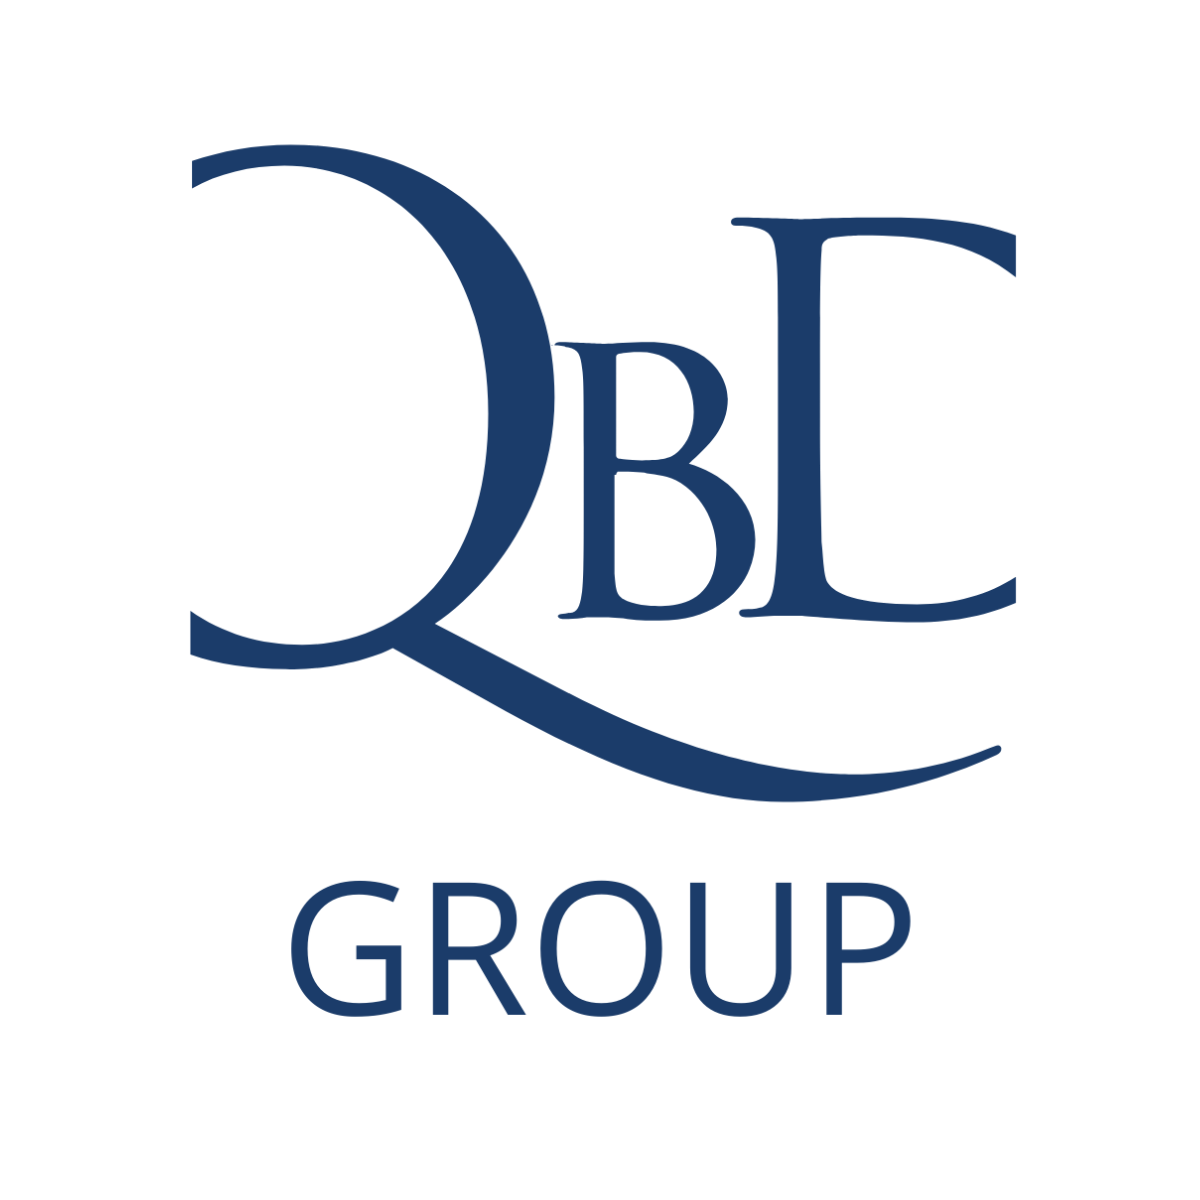 QbD Group logo